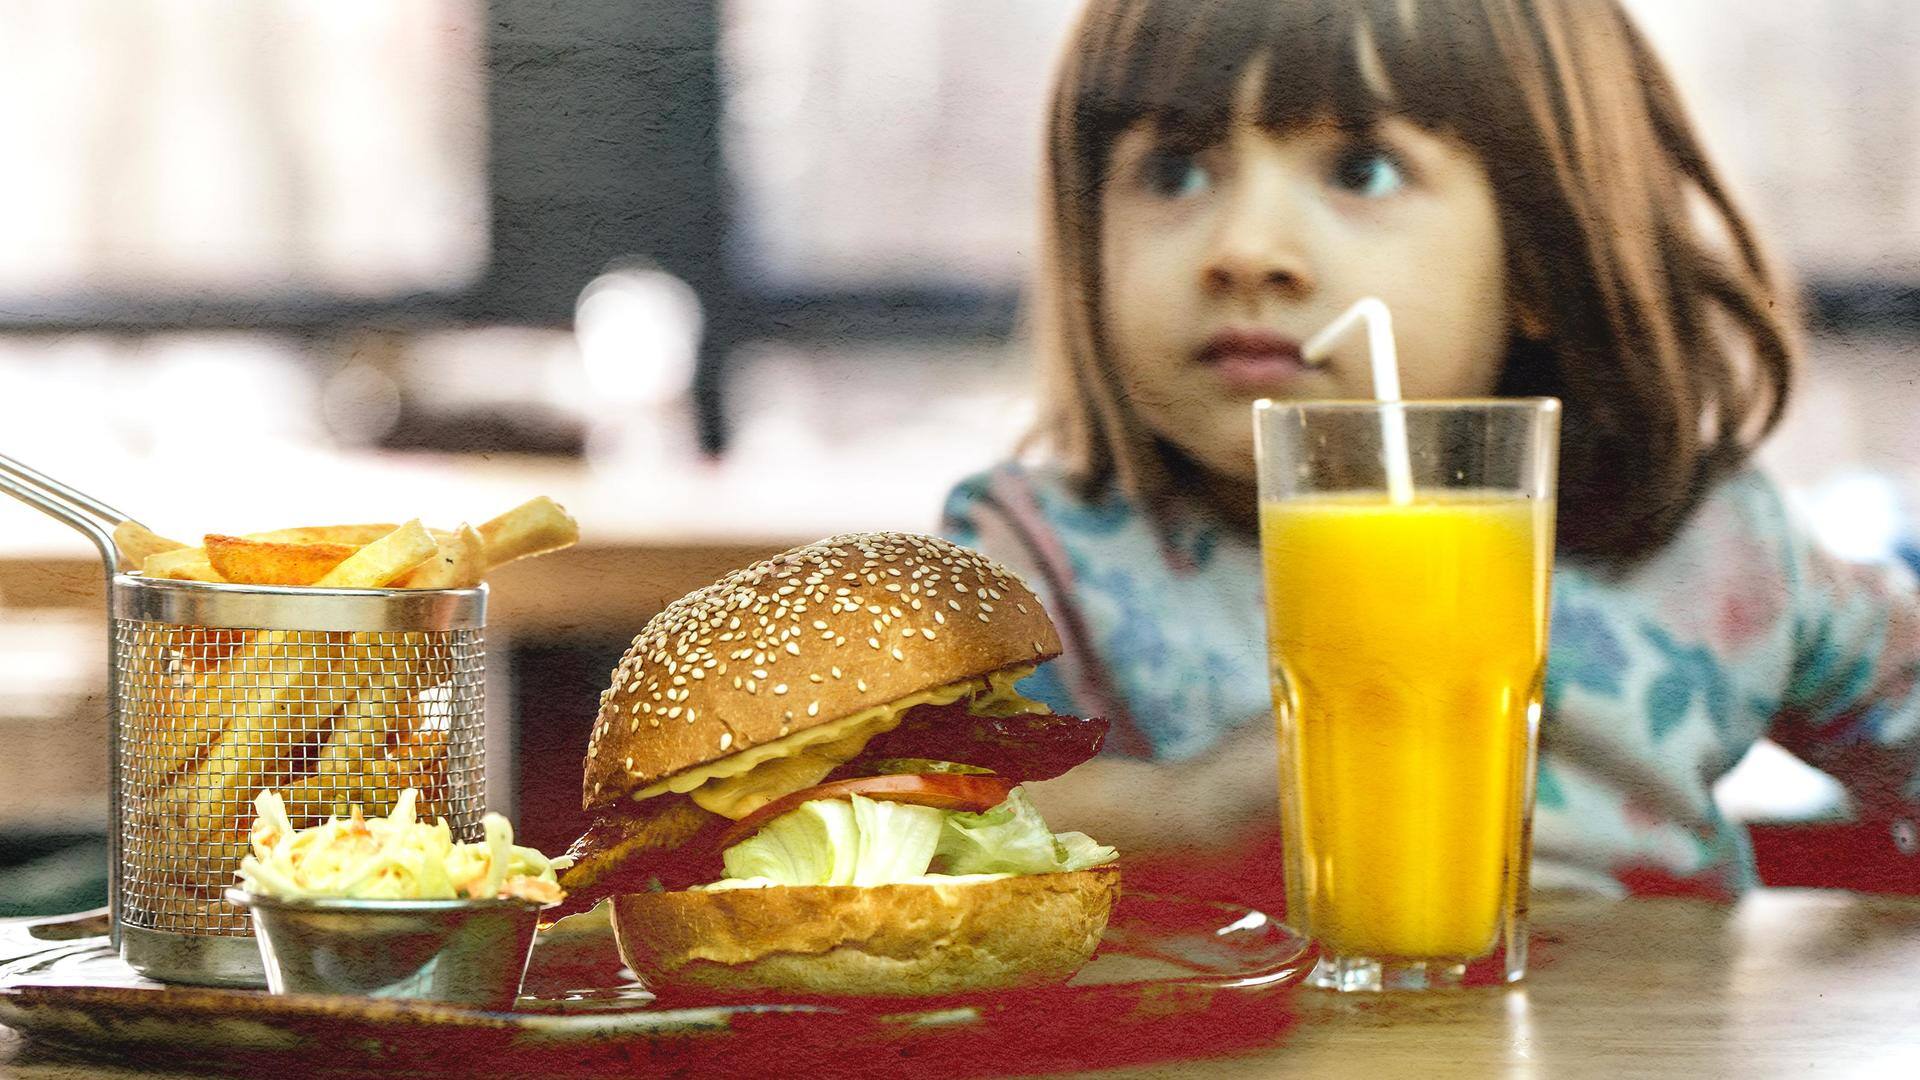 How marketing of unhealthy foods is influencing children's food habits